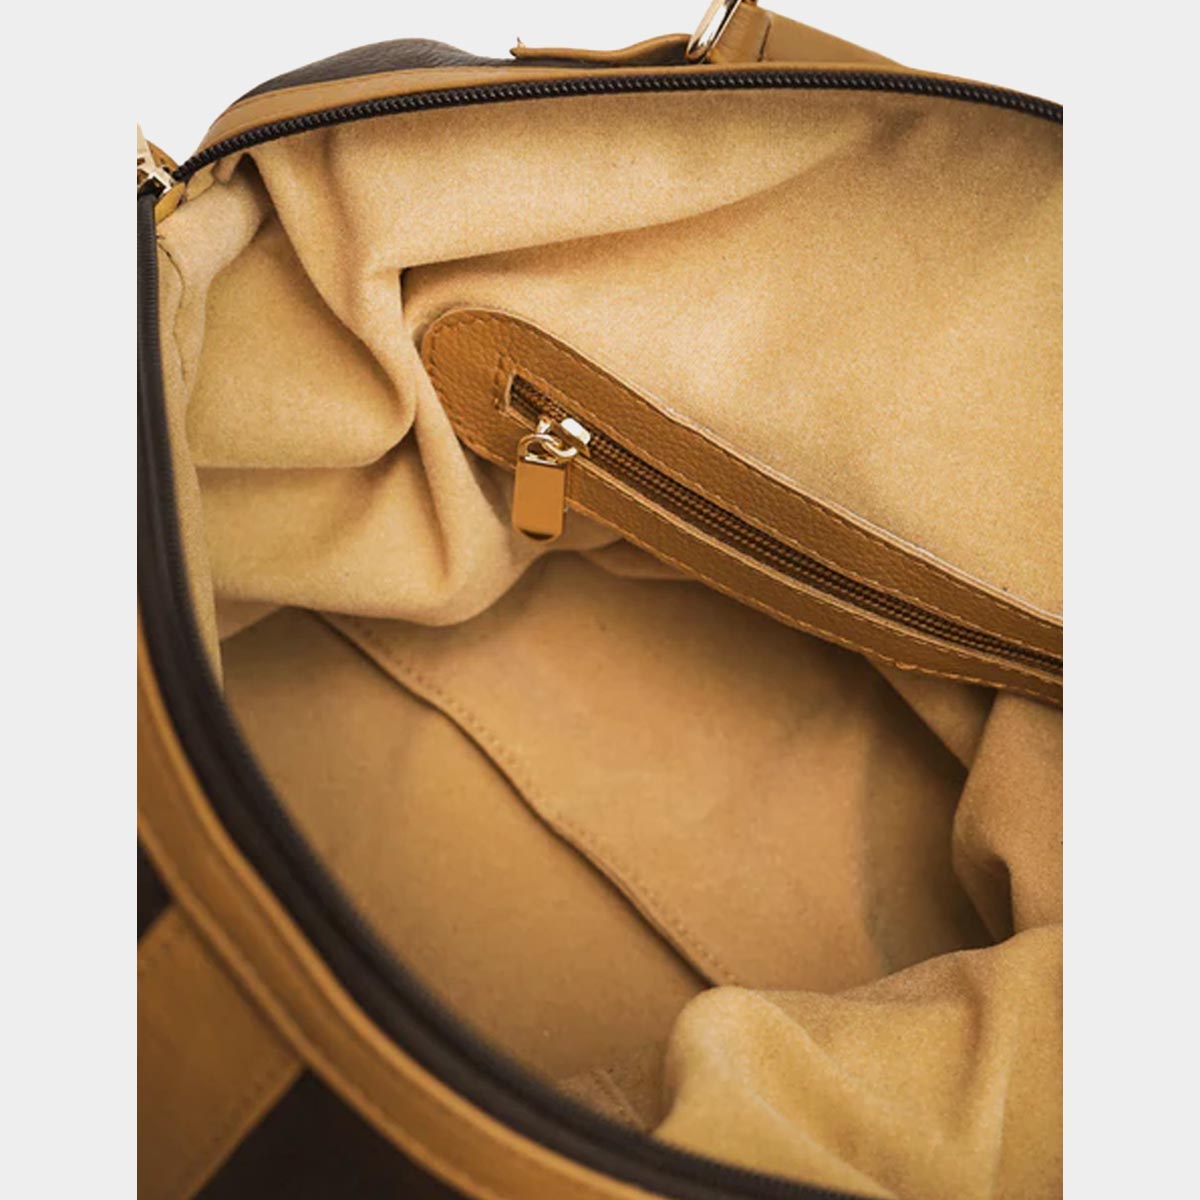 dark bown leather duffle bagTravel Duffle Bag, Gym Tote Bag (6)